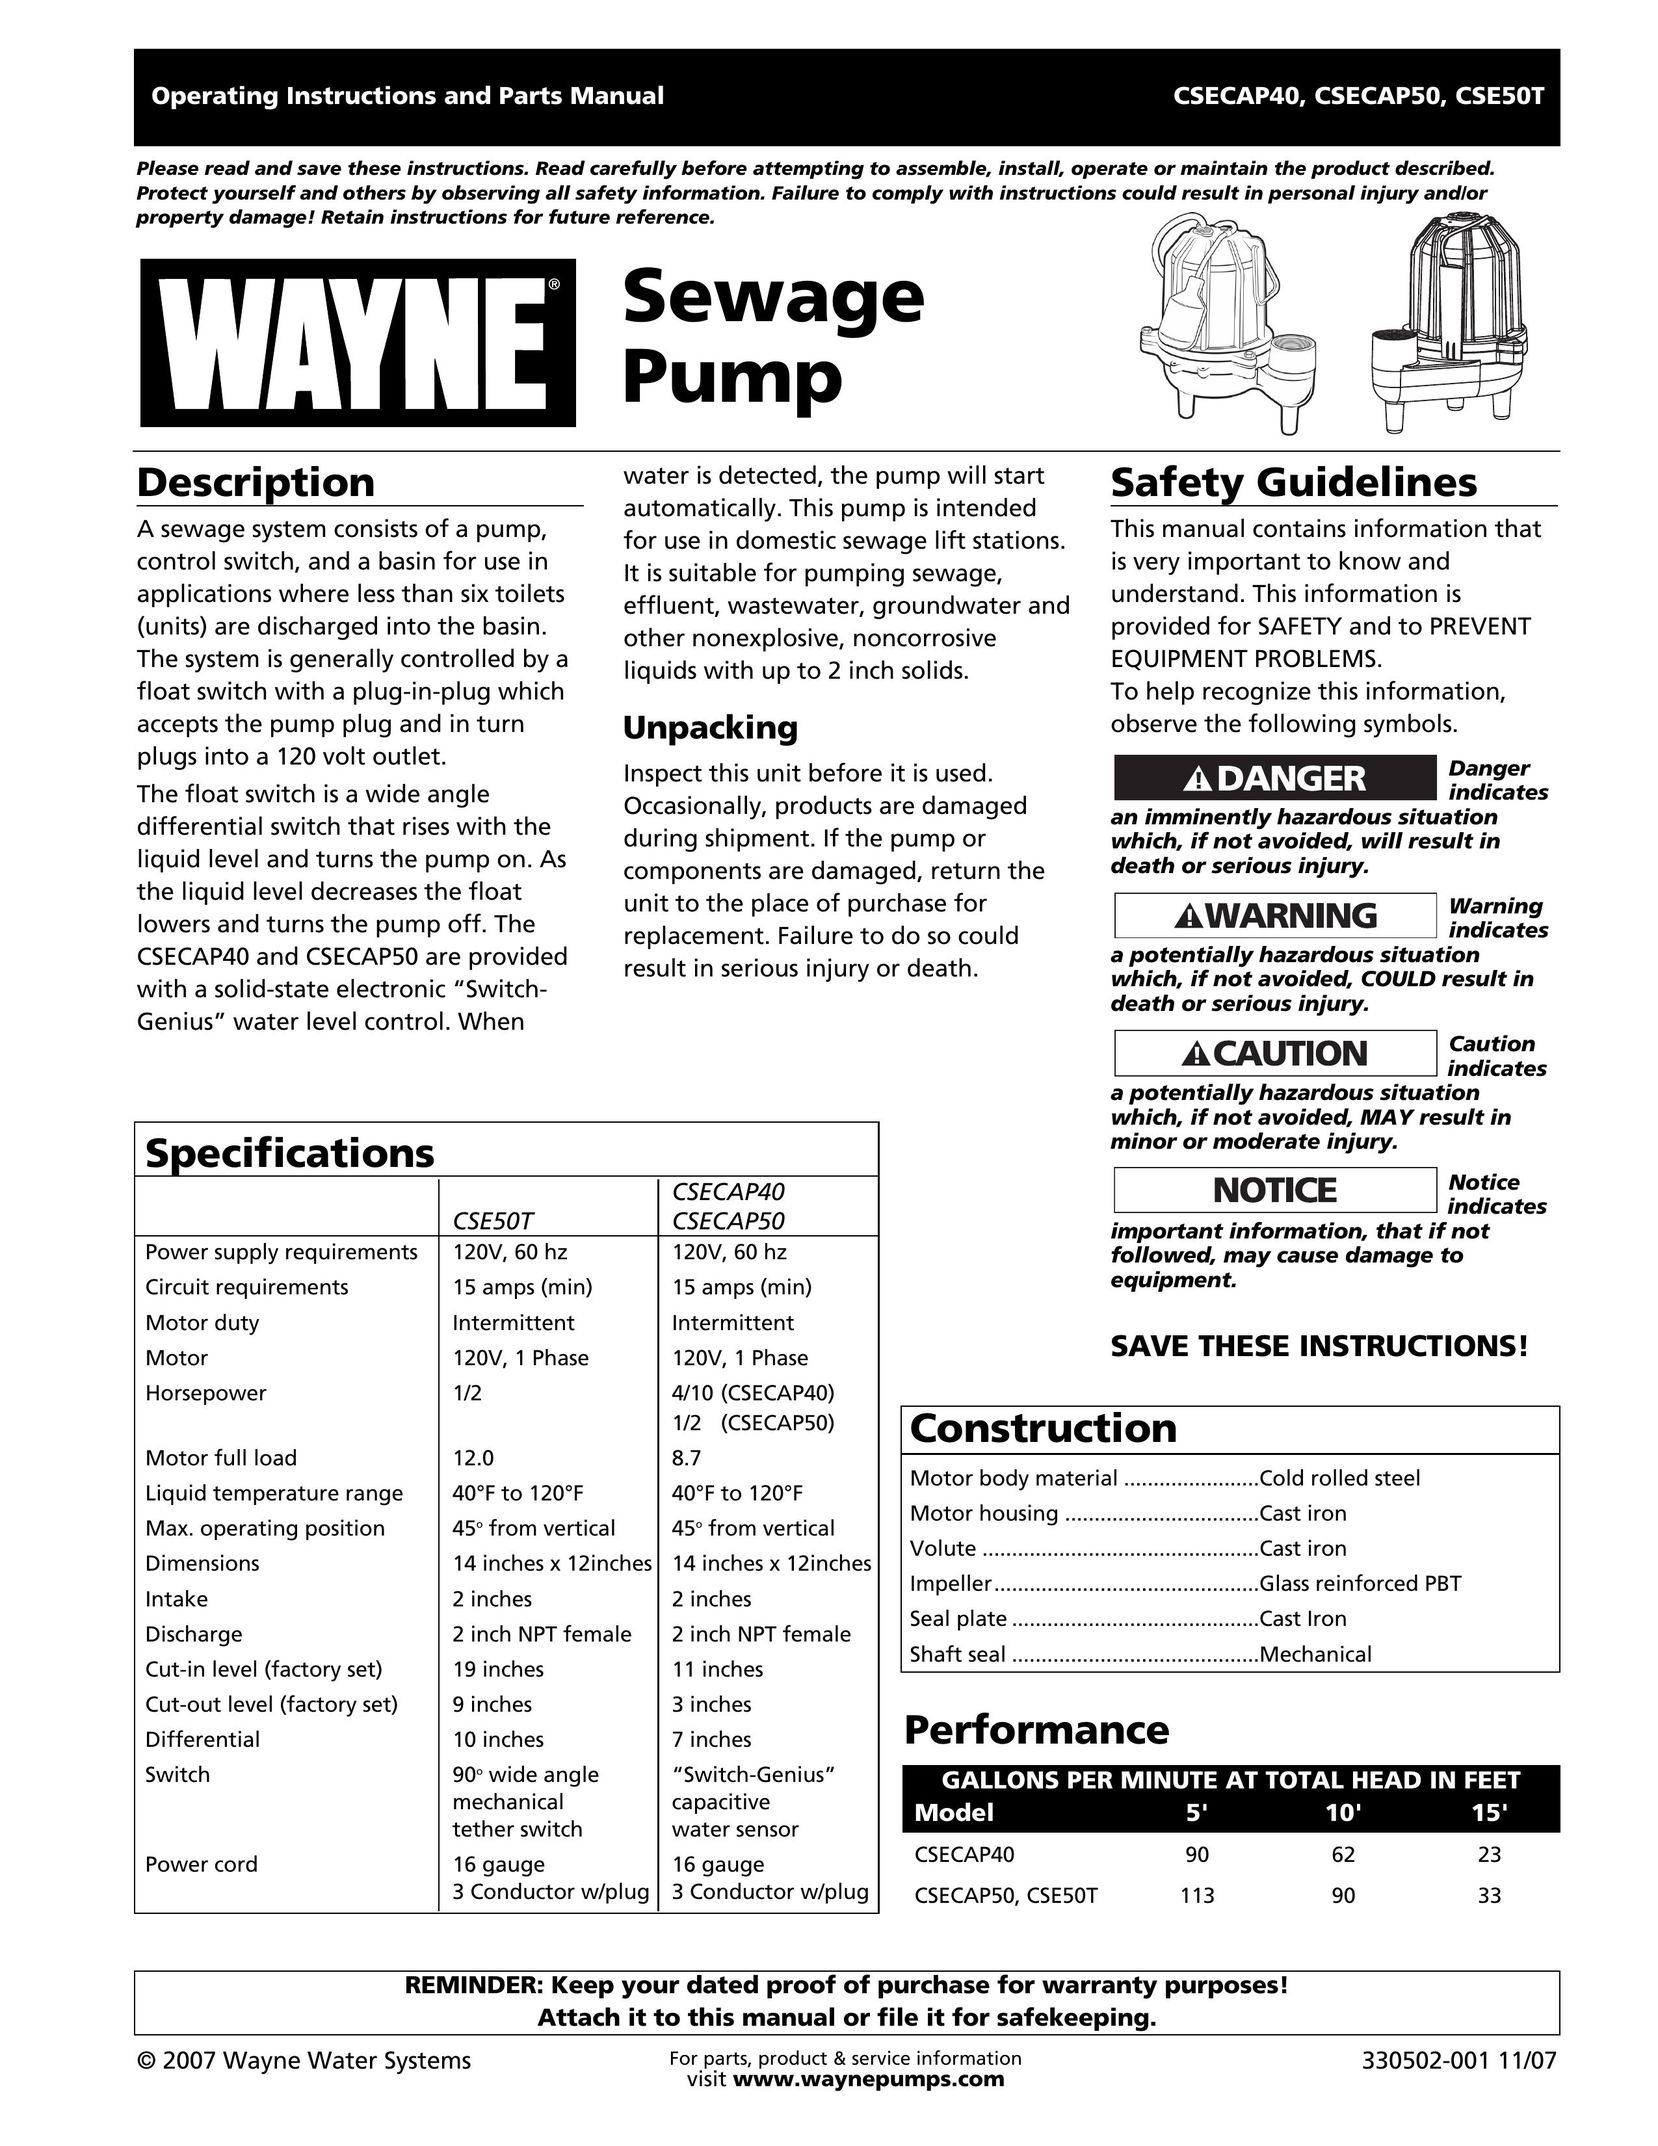 Wayne 330502-001 Septic System User Manual